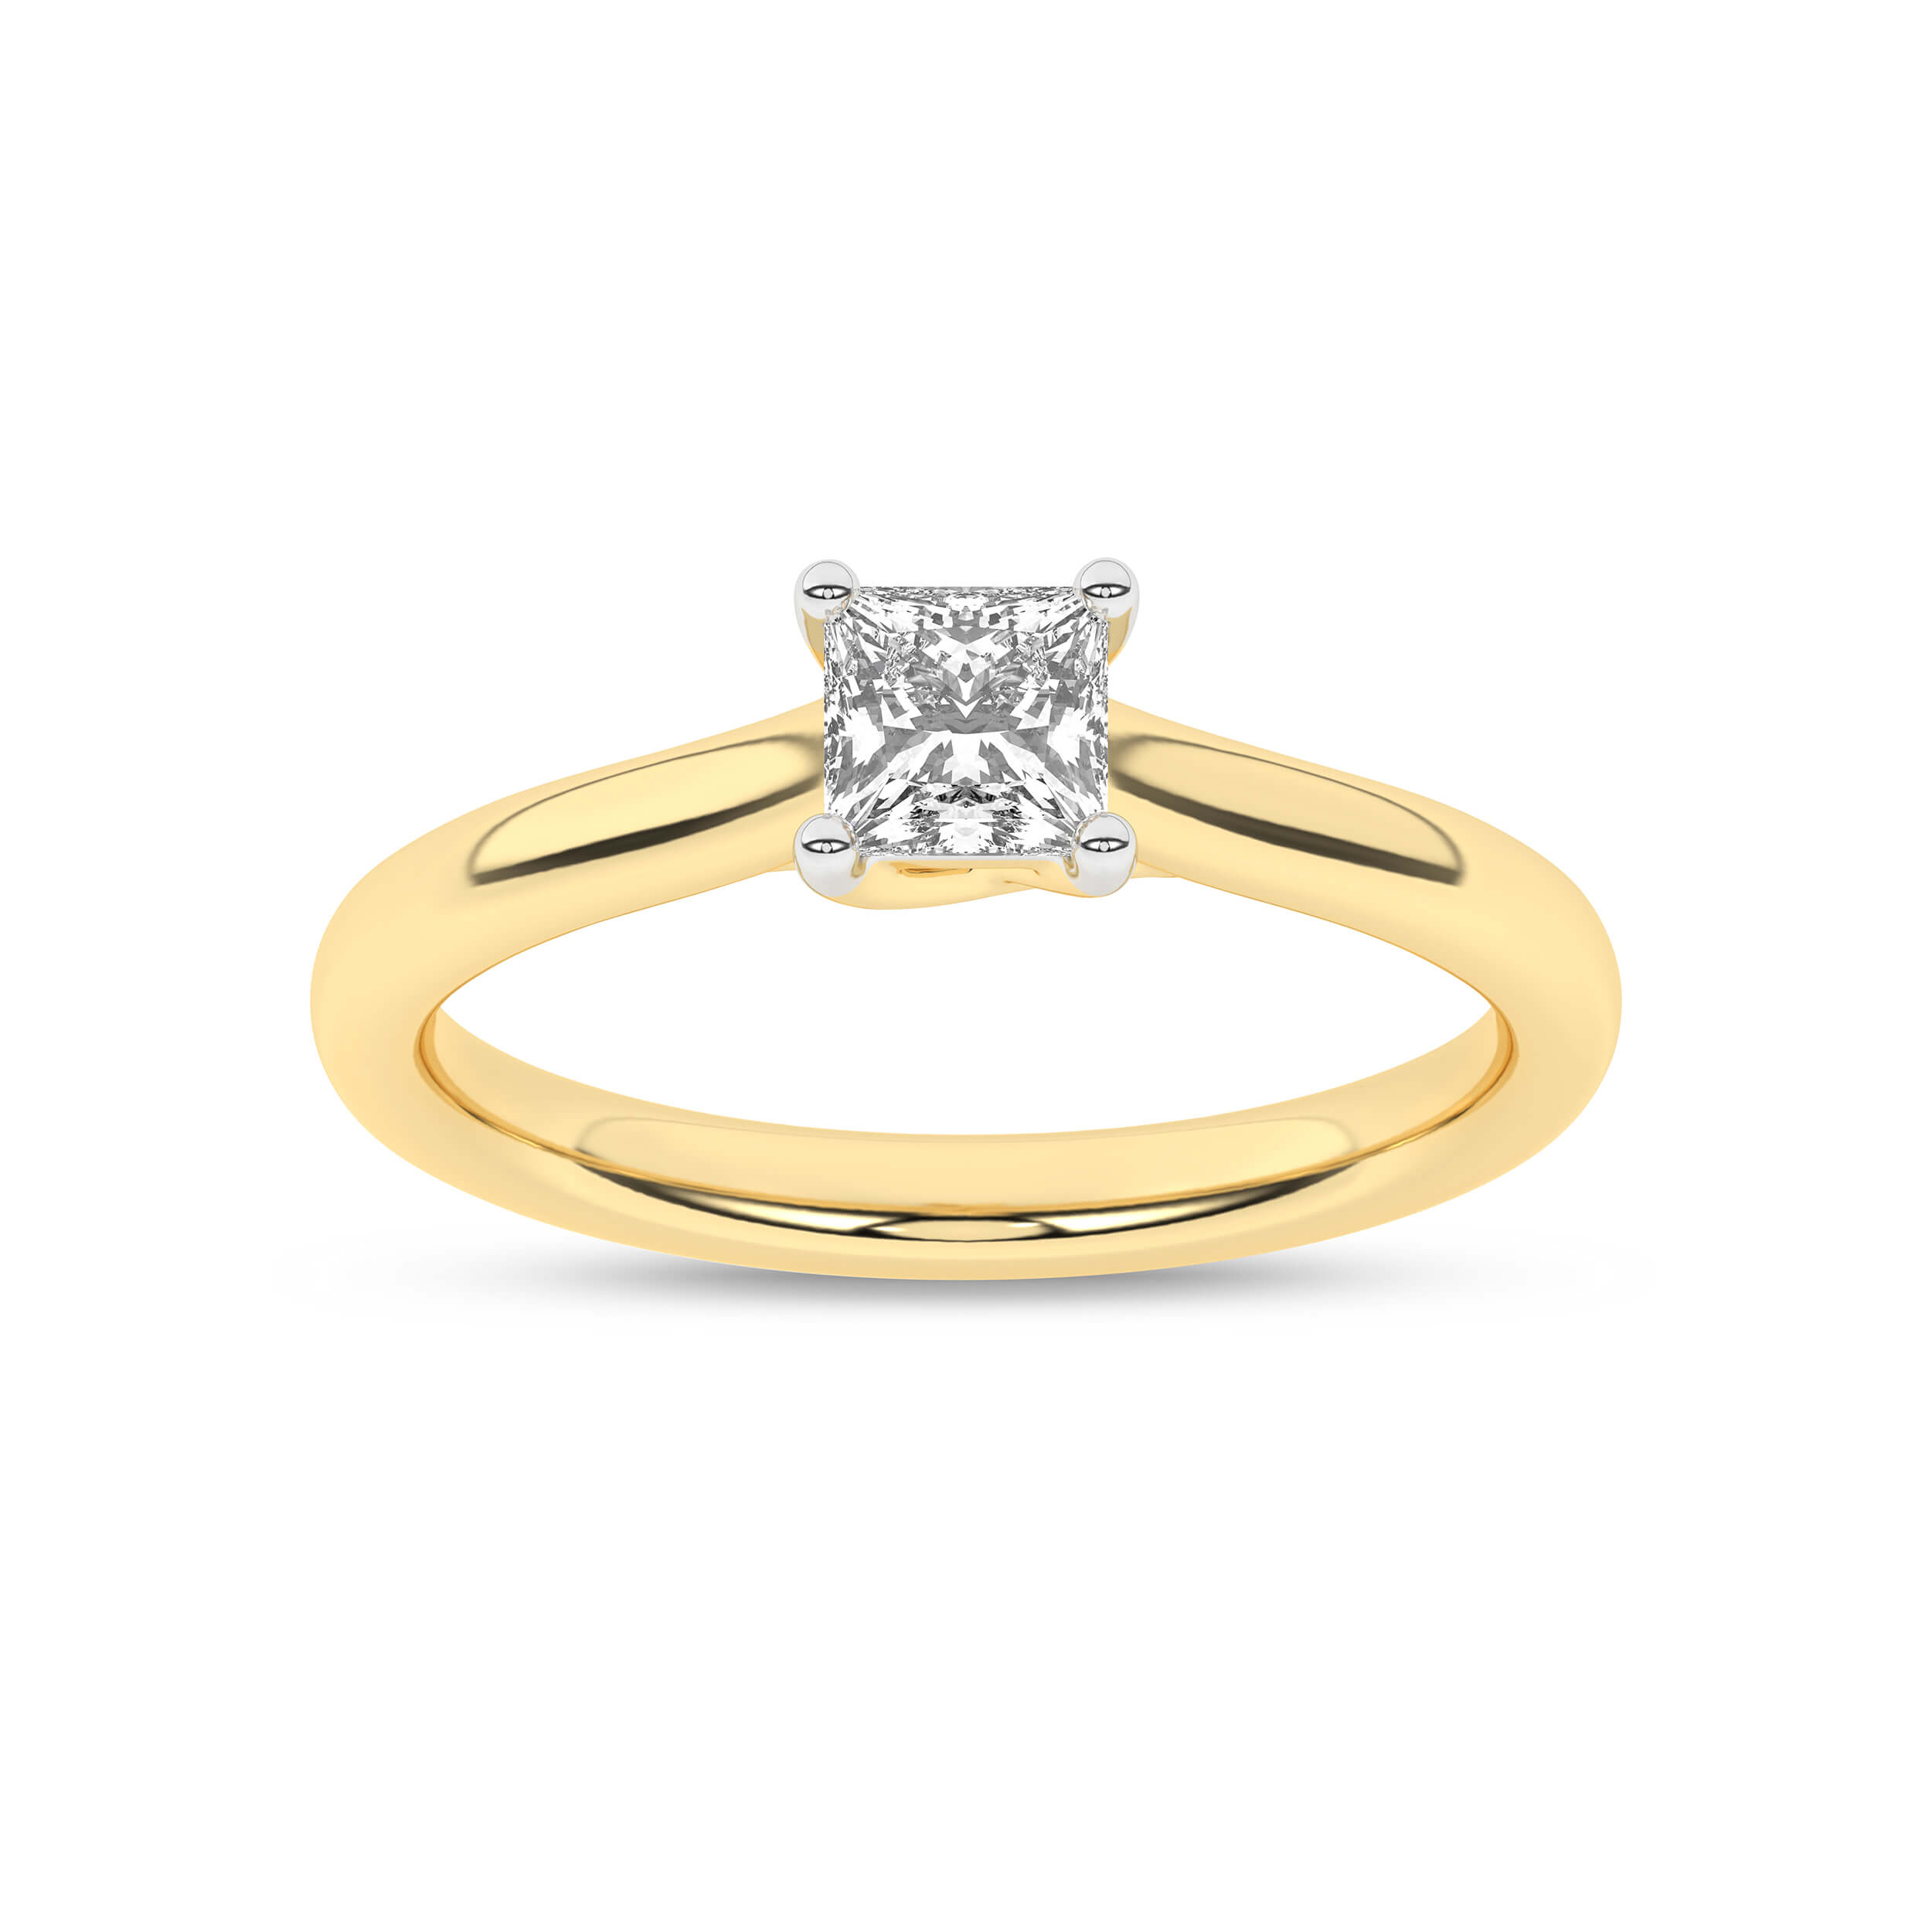 Inel de logodna din Aur Galben 14K cu Diamant 0.50Ct, articol RB18882EG, previzualizare foto 3